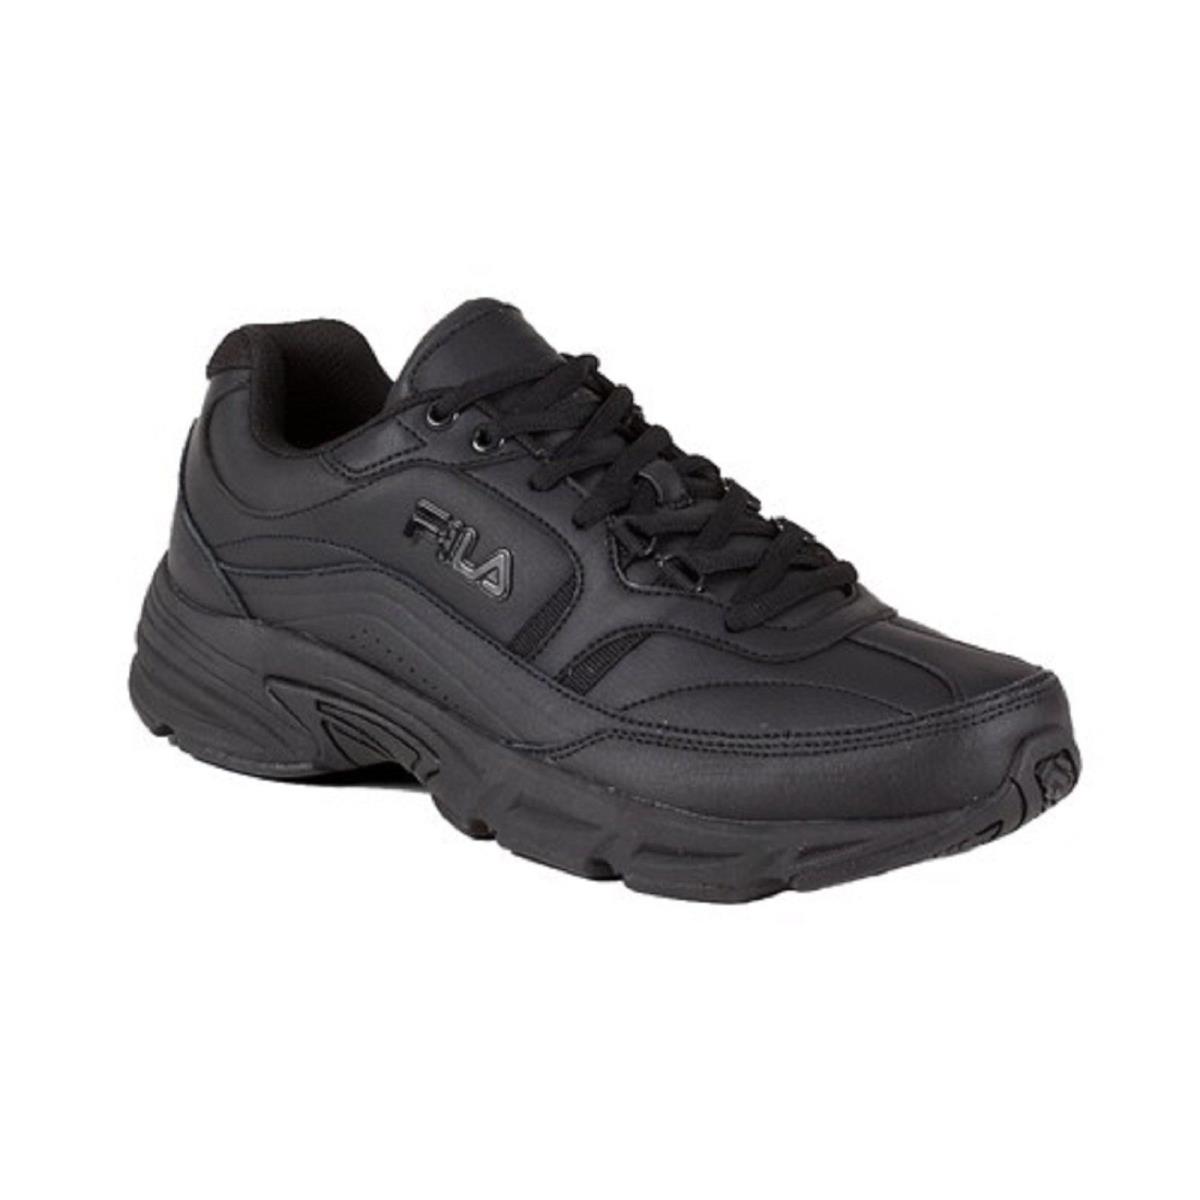 Fila Mens Memory Foam Workshift Slip-resistant Black Medium Wide Shoes Sneakers - Black